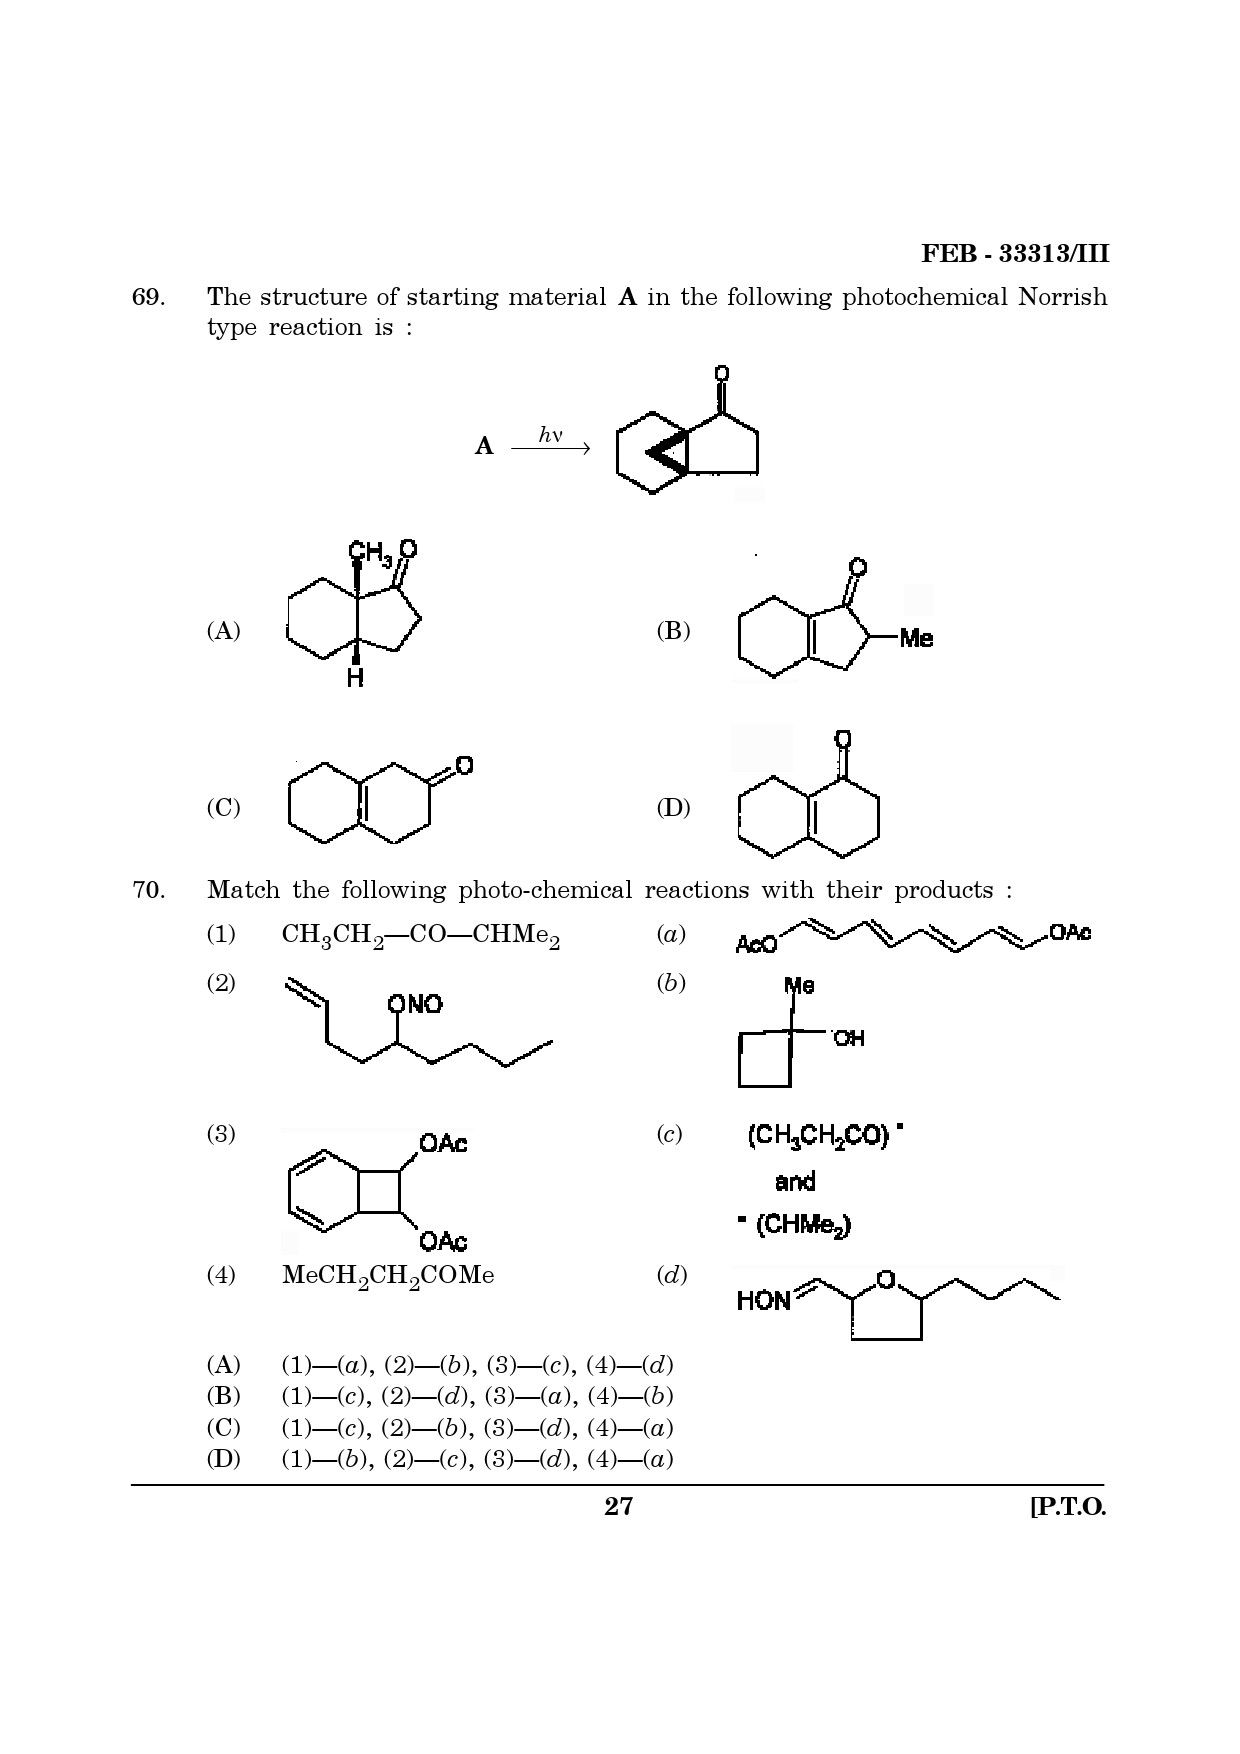 Maharashtra SET Chemical Sciences Question Paper III February 2013 27